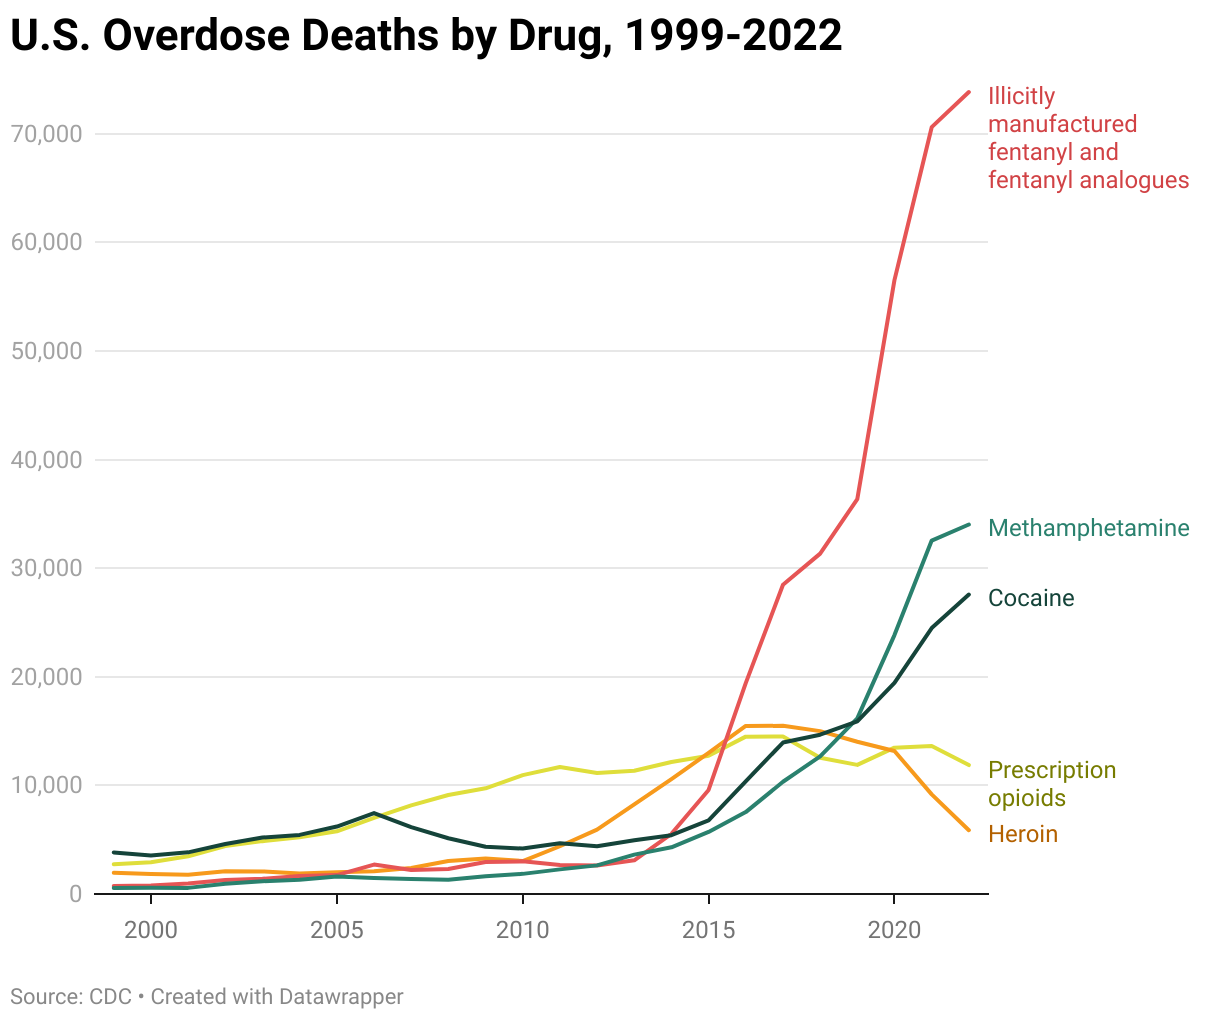 Graph showing U.S. overdose deaths by drug from 1999-2022, pulling from CDC data. https://www.cdc.gov/nchs/nvss/vsrr/drug-overdose-data.htm